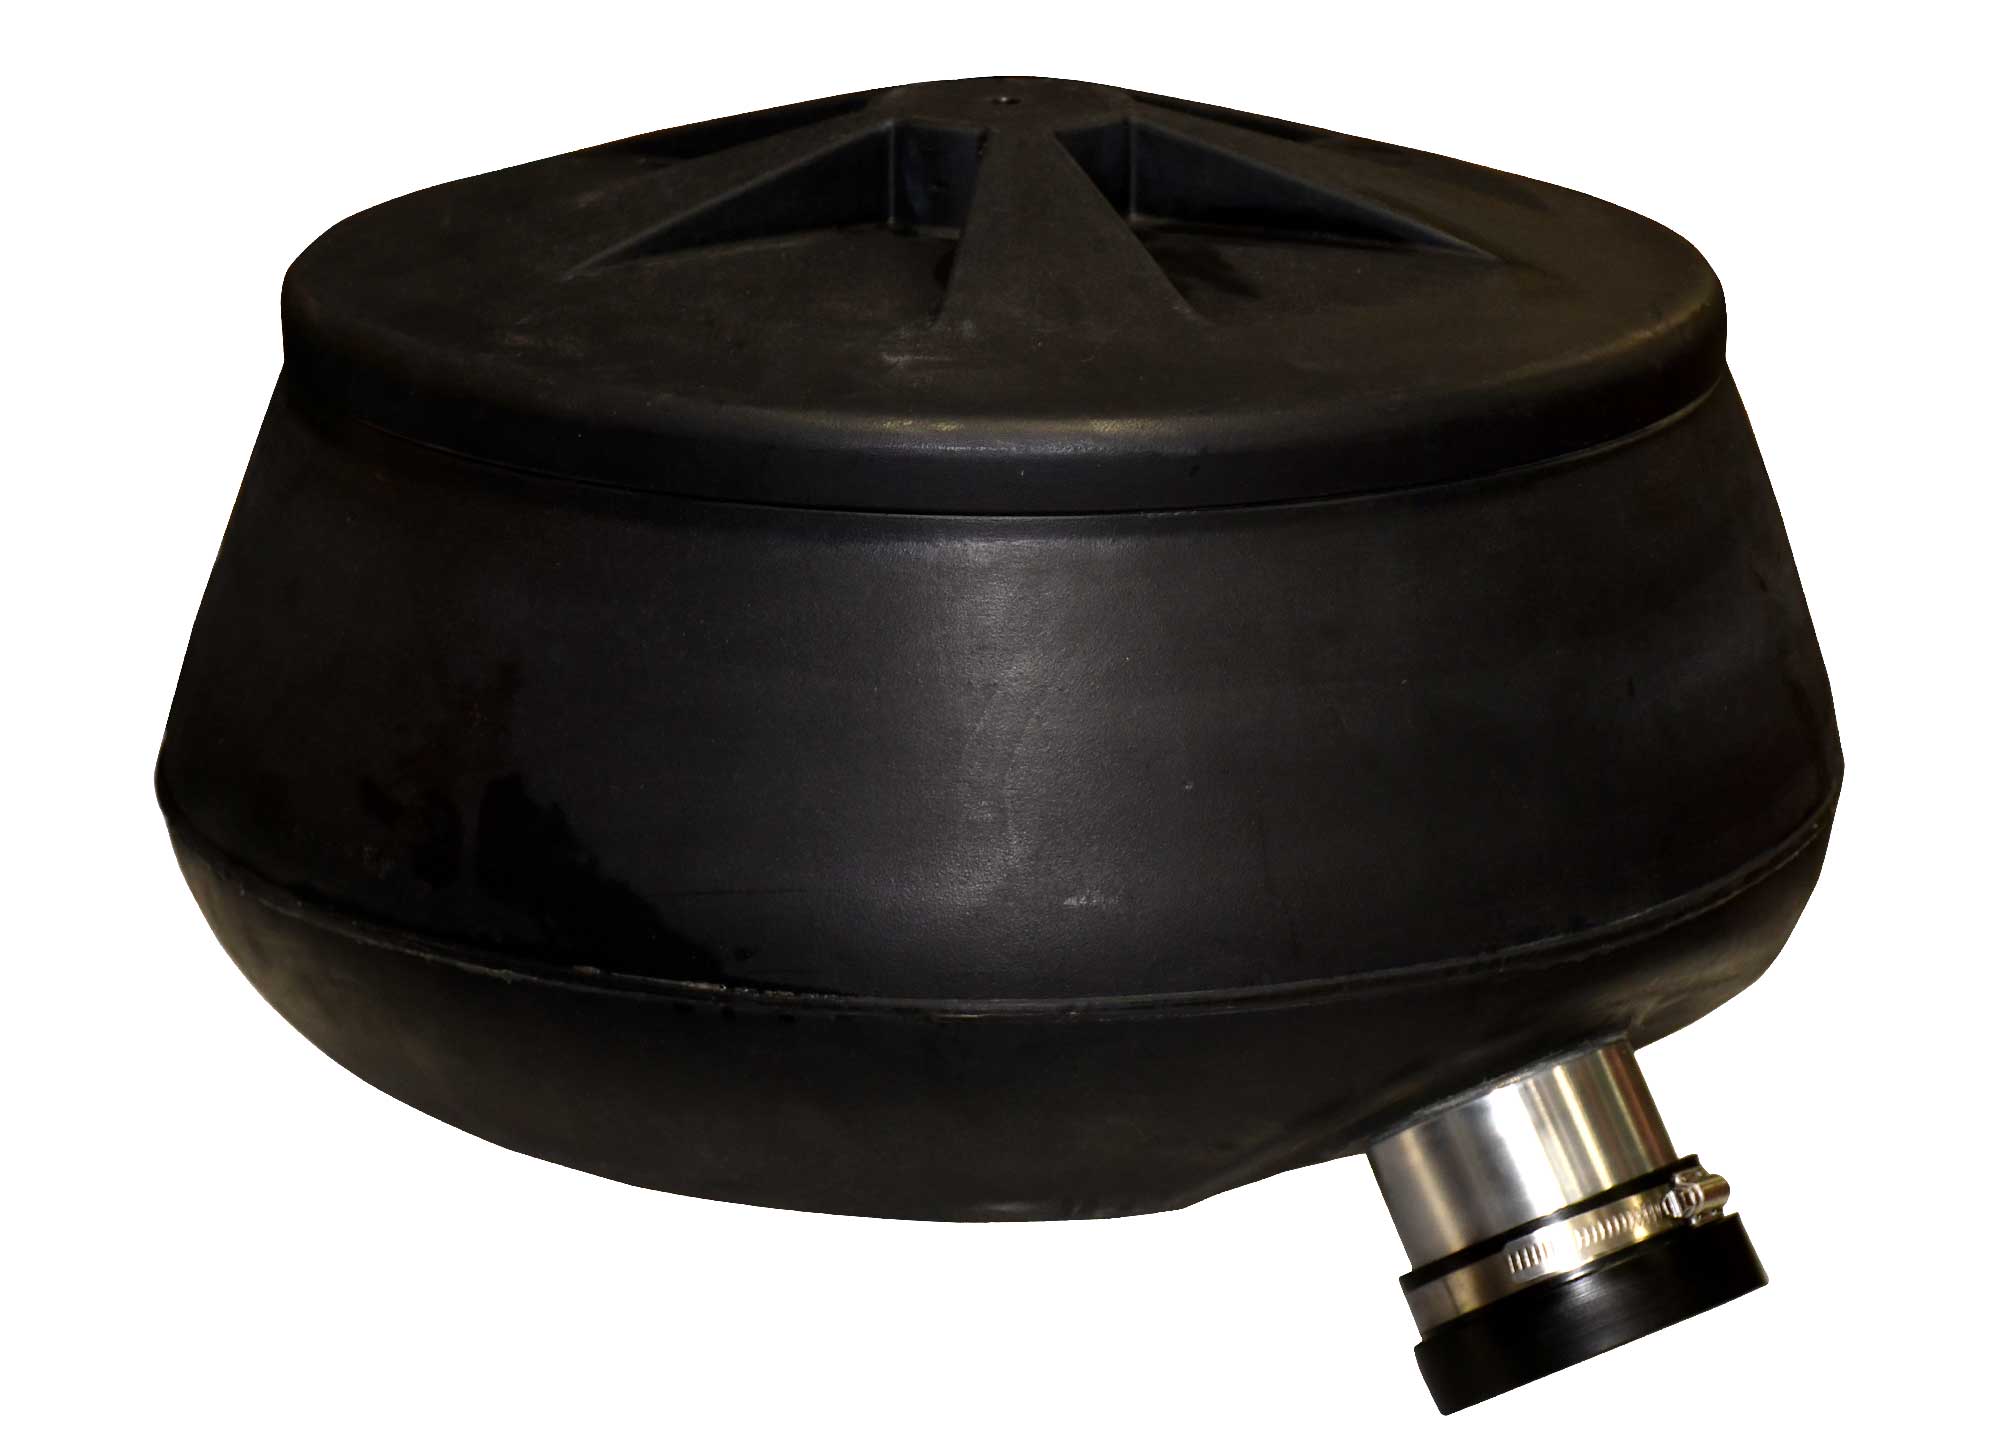 1540 - Replacement bowl for the Burr King VibraKing M15